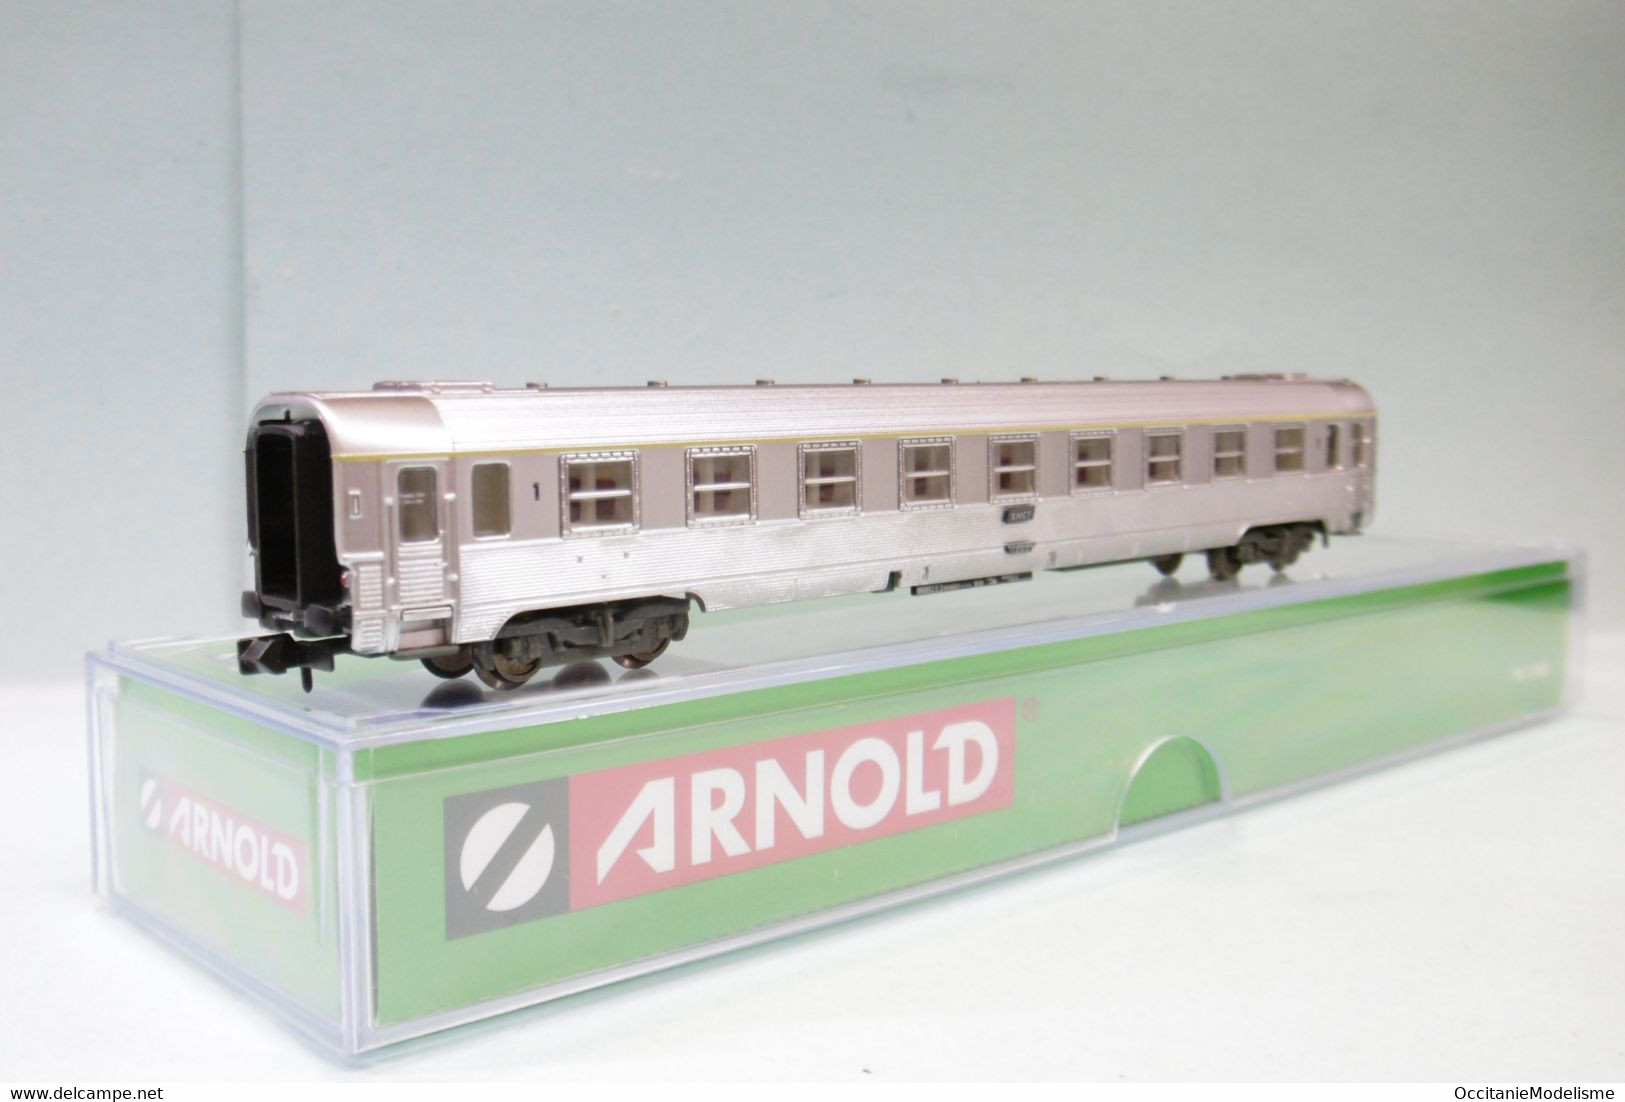 Arnold - Voiture DEV INOX A9 1ère Classe SNCF ép. IV Réf. HN4324 Neuf N 1/160 - Passenger Trains